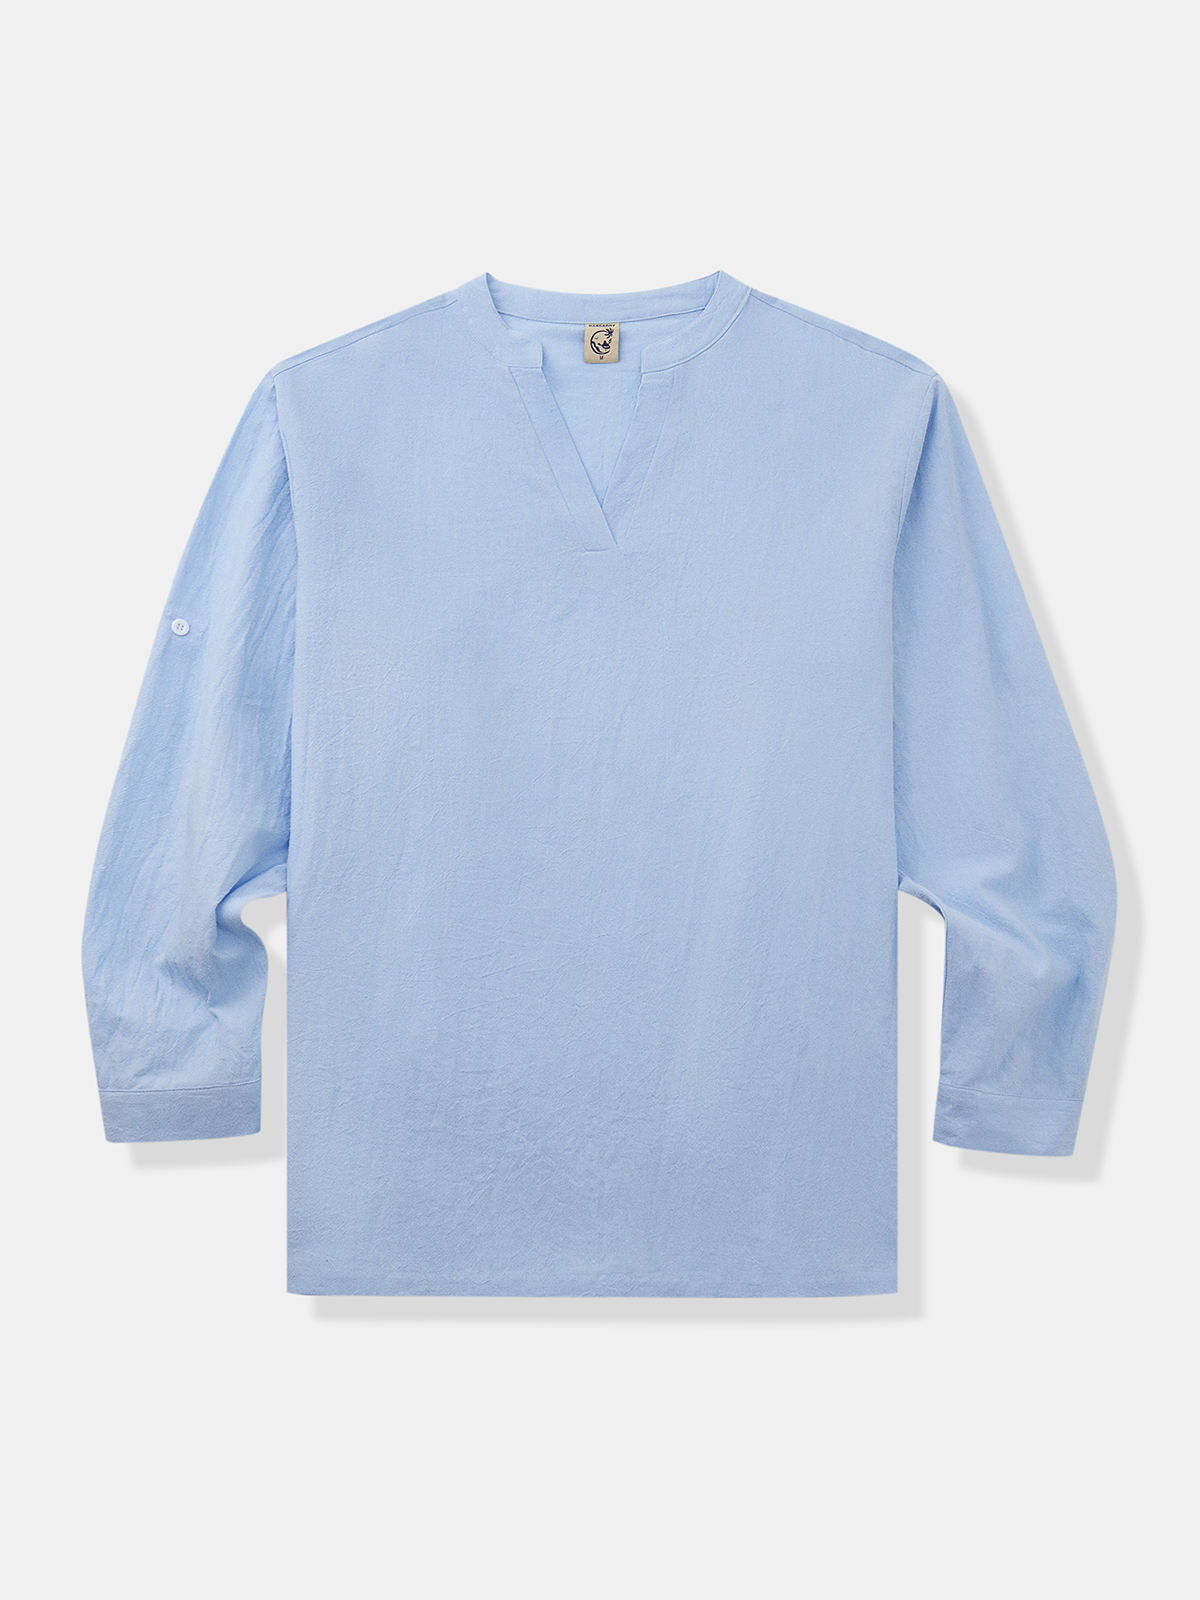 Hardaddy Cotton Plain Long Sleeve V Neck Shirt